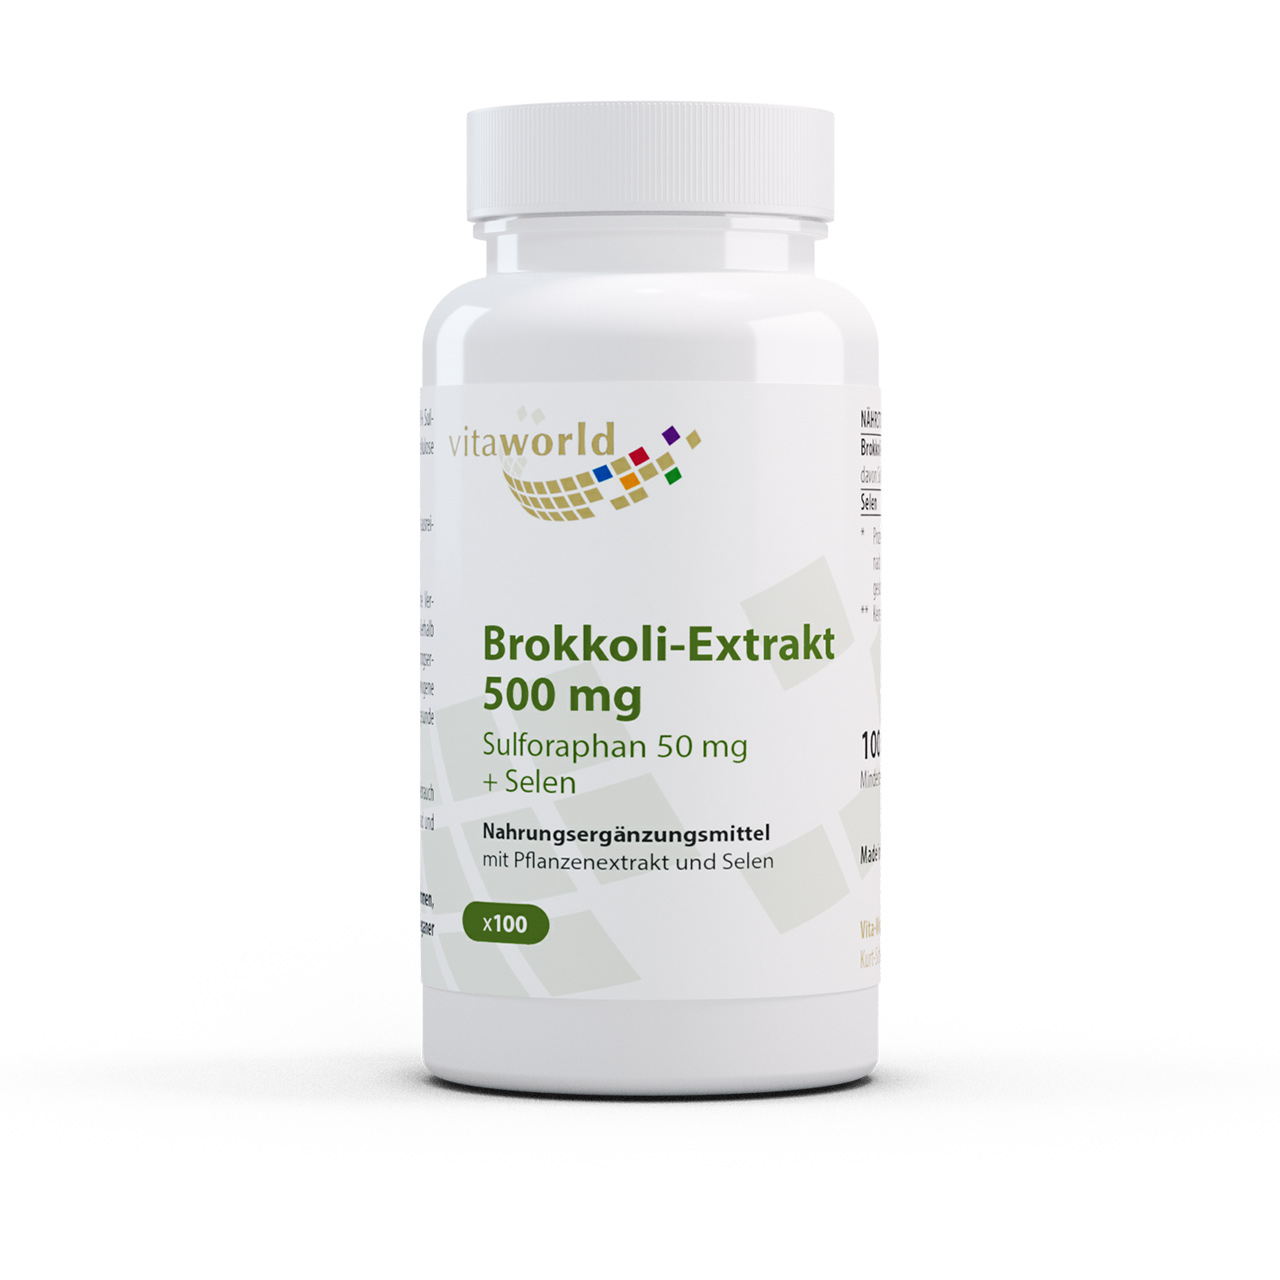 Brokkoli-Extrakt 500 mg (100 Kps)